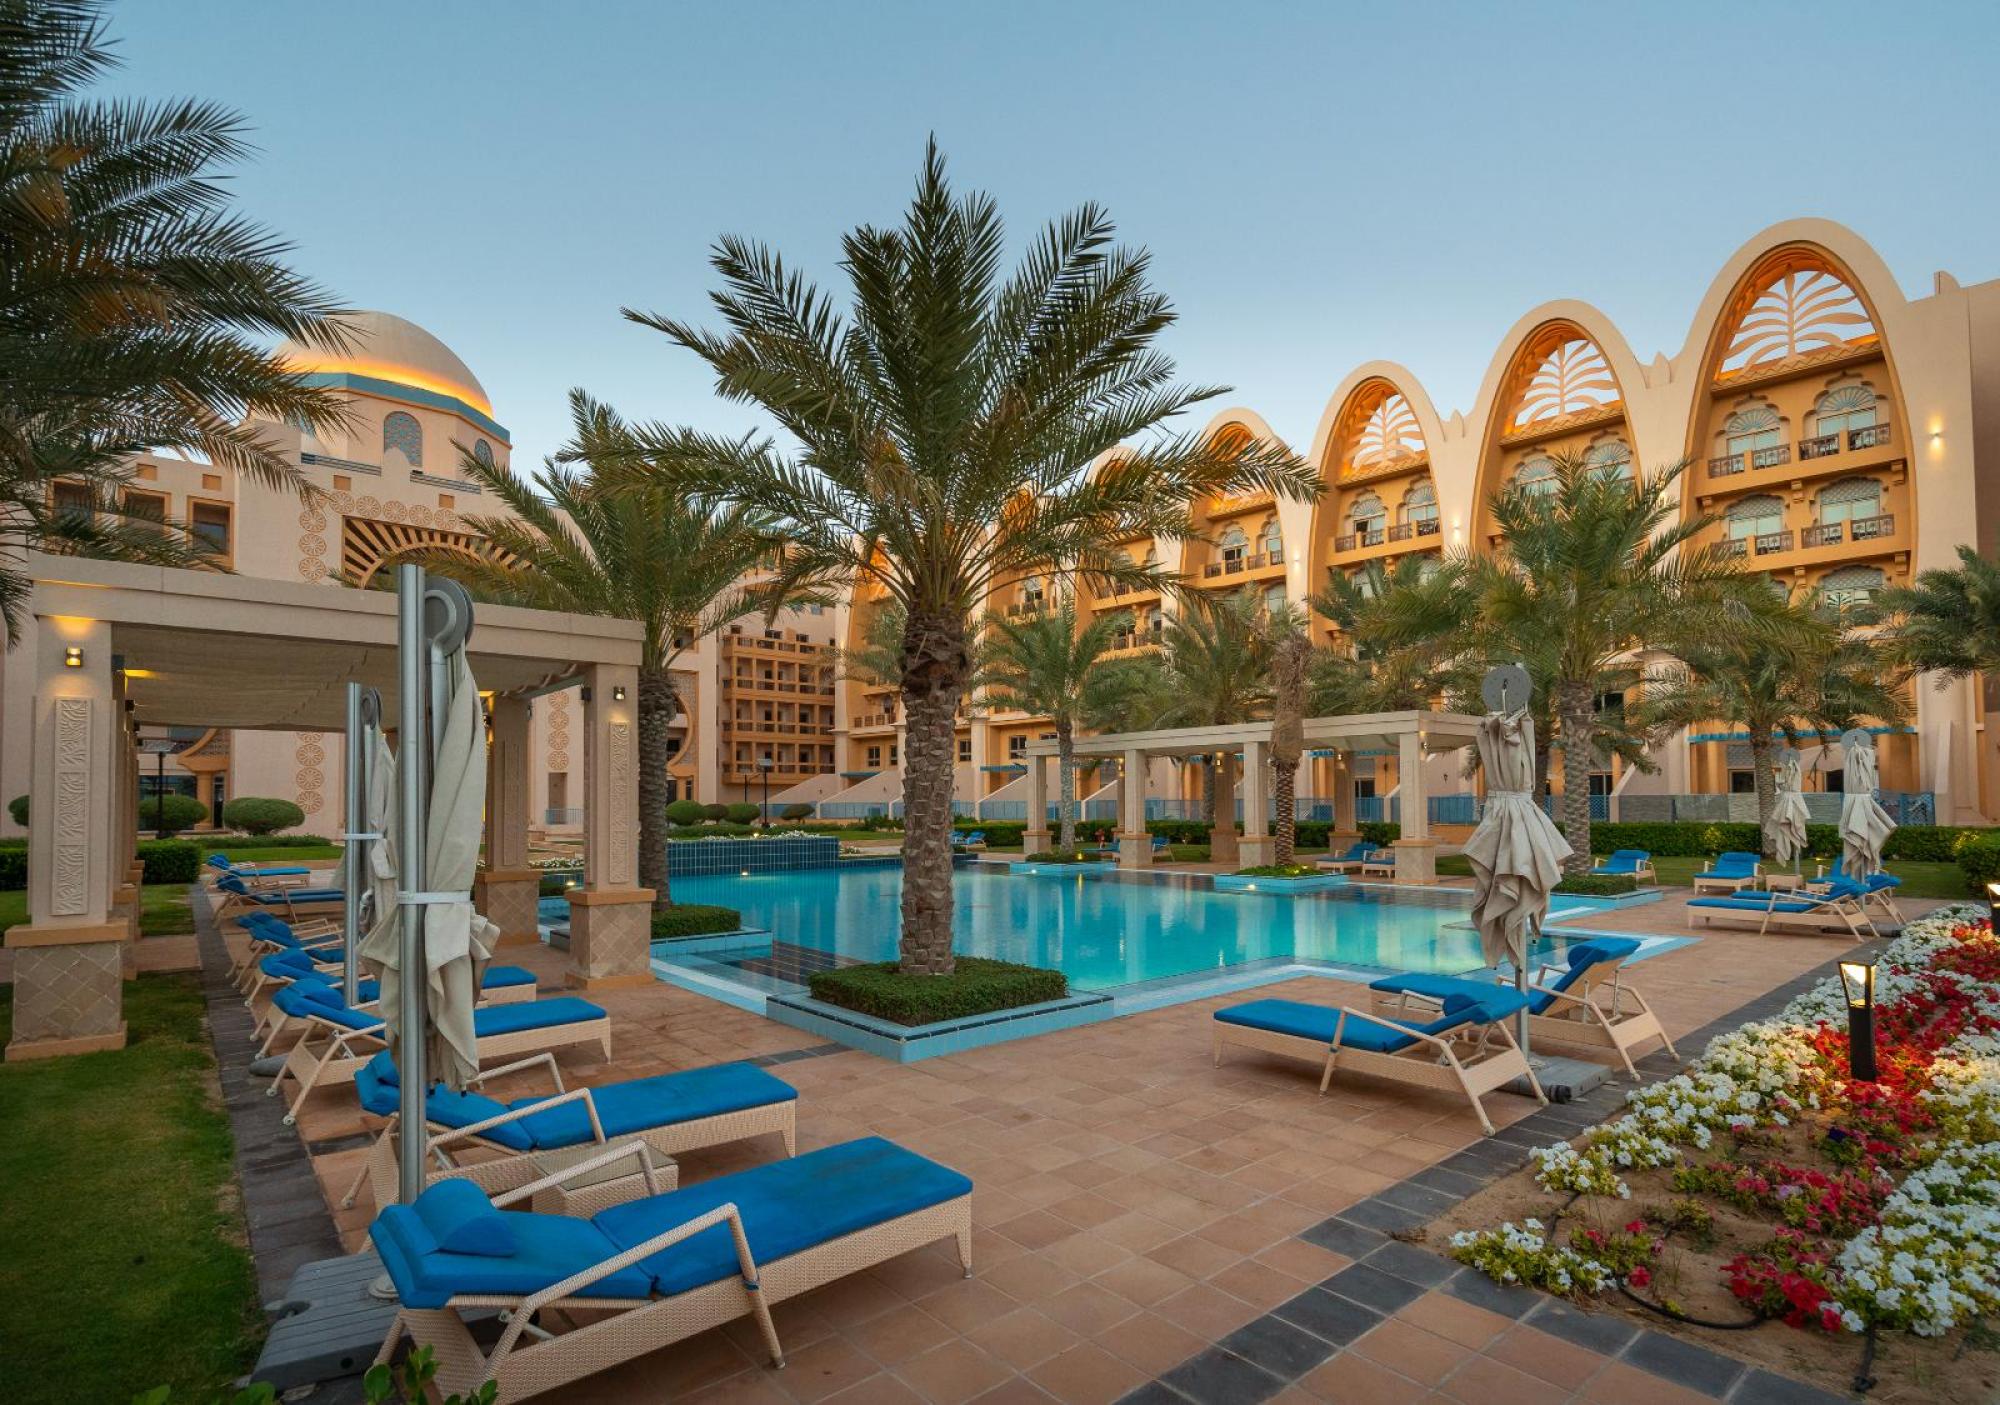 Premium Townhome 300m2 Private Pool, Beach,Parking(2) - Dubai